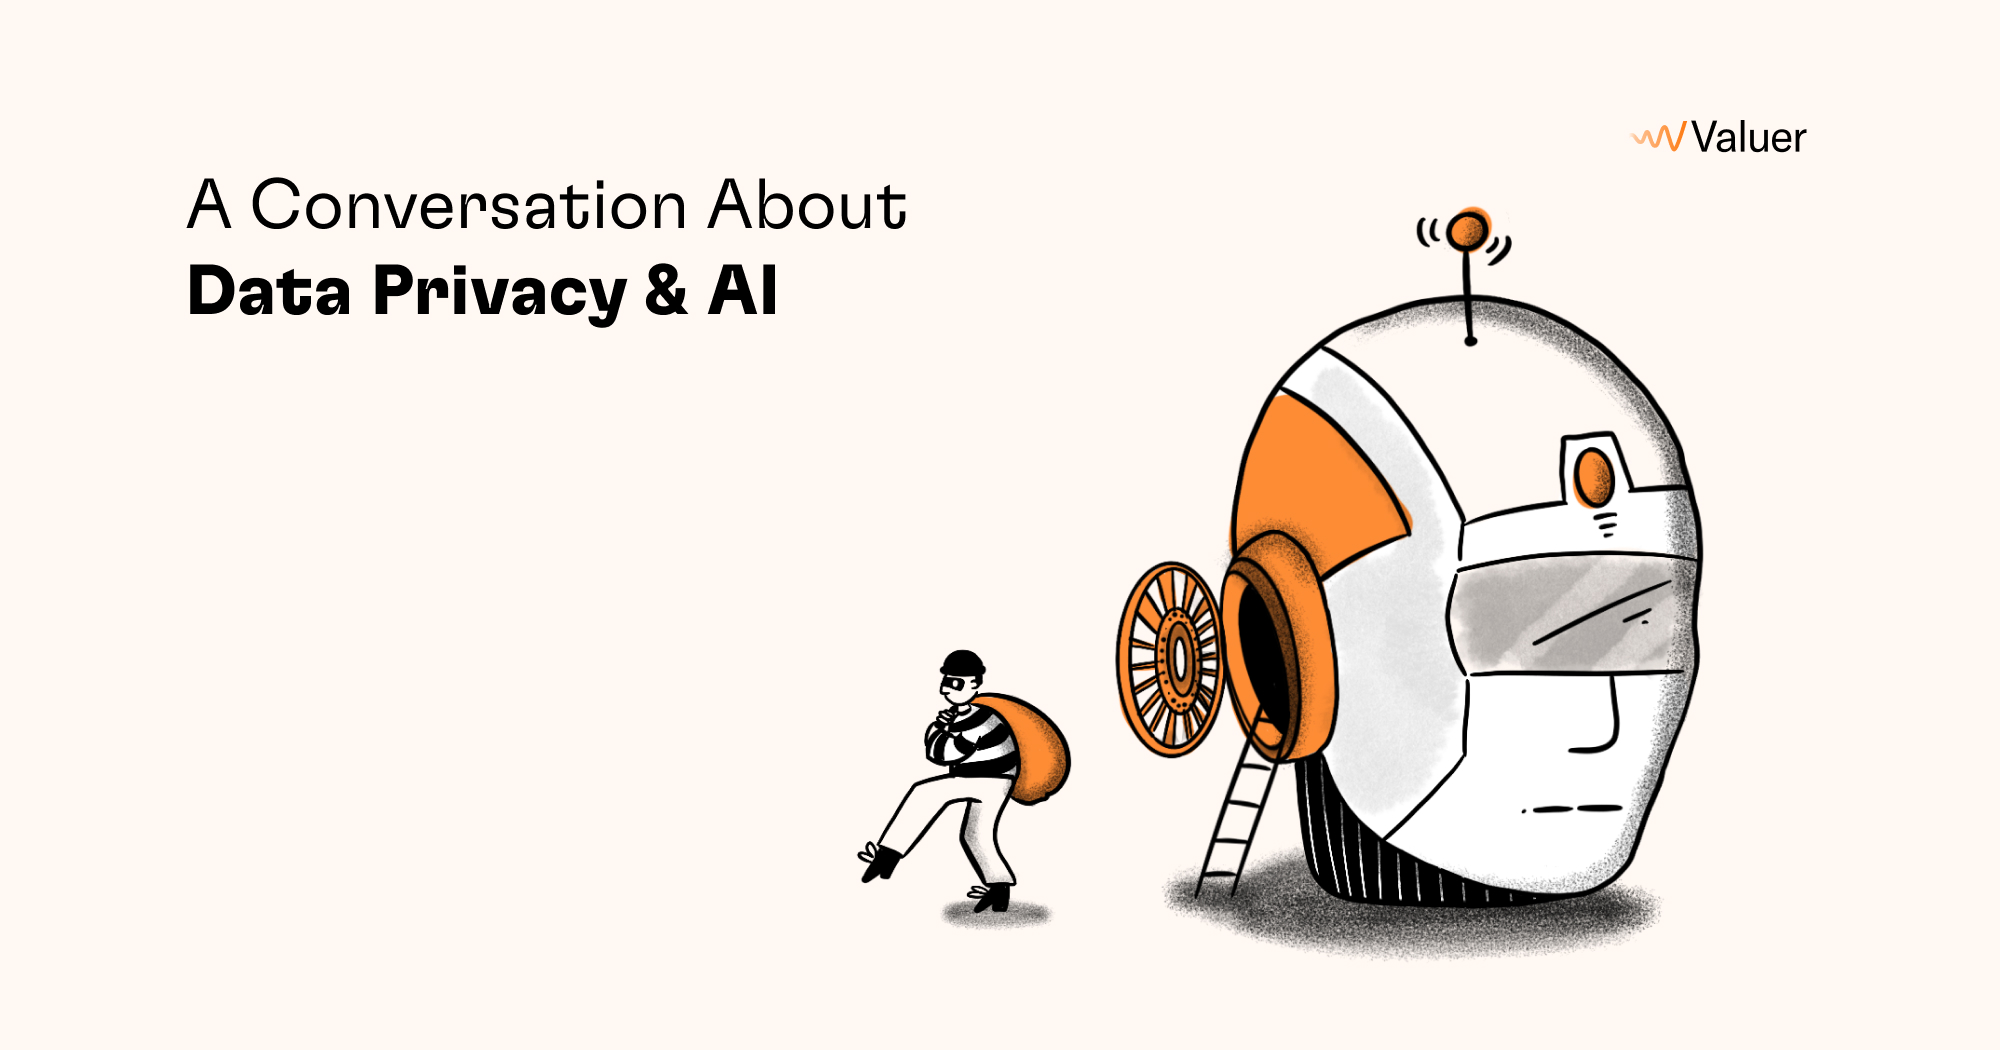 A Conversation About Data Privacy & AI